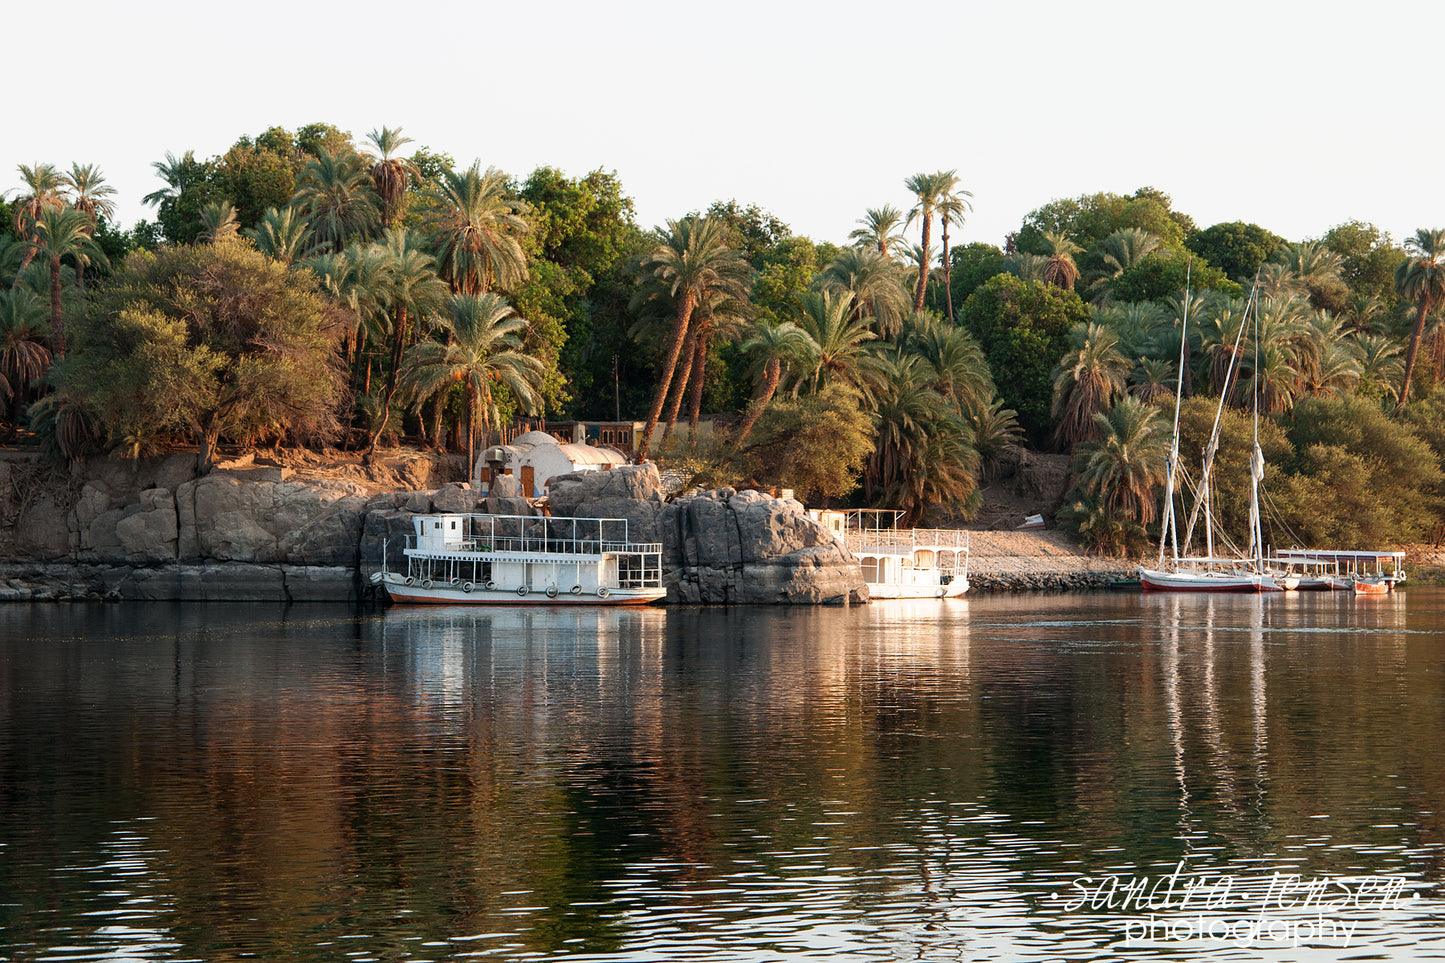 Print - Egypt, Aswan - The Nile